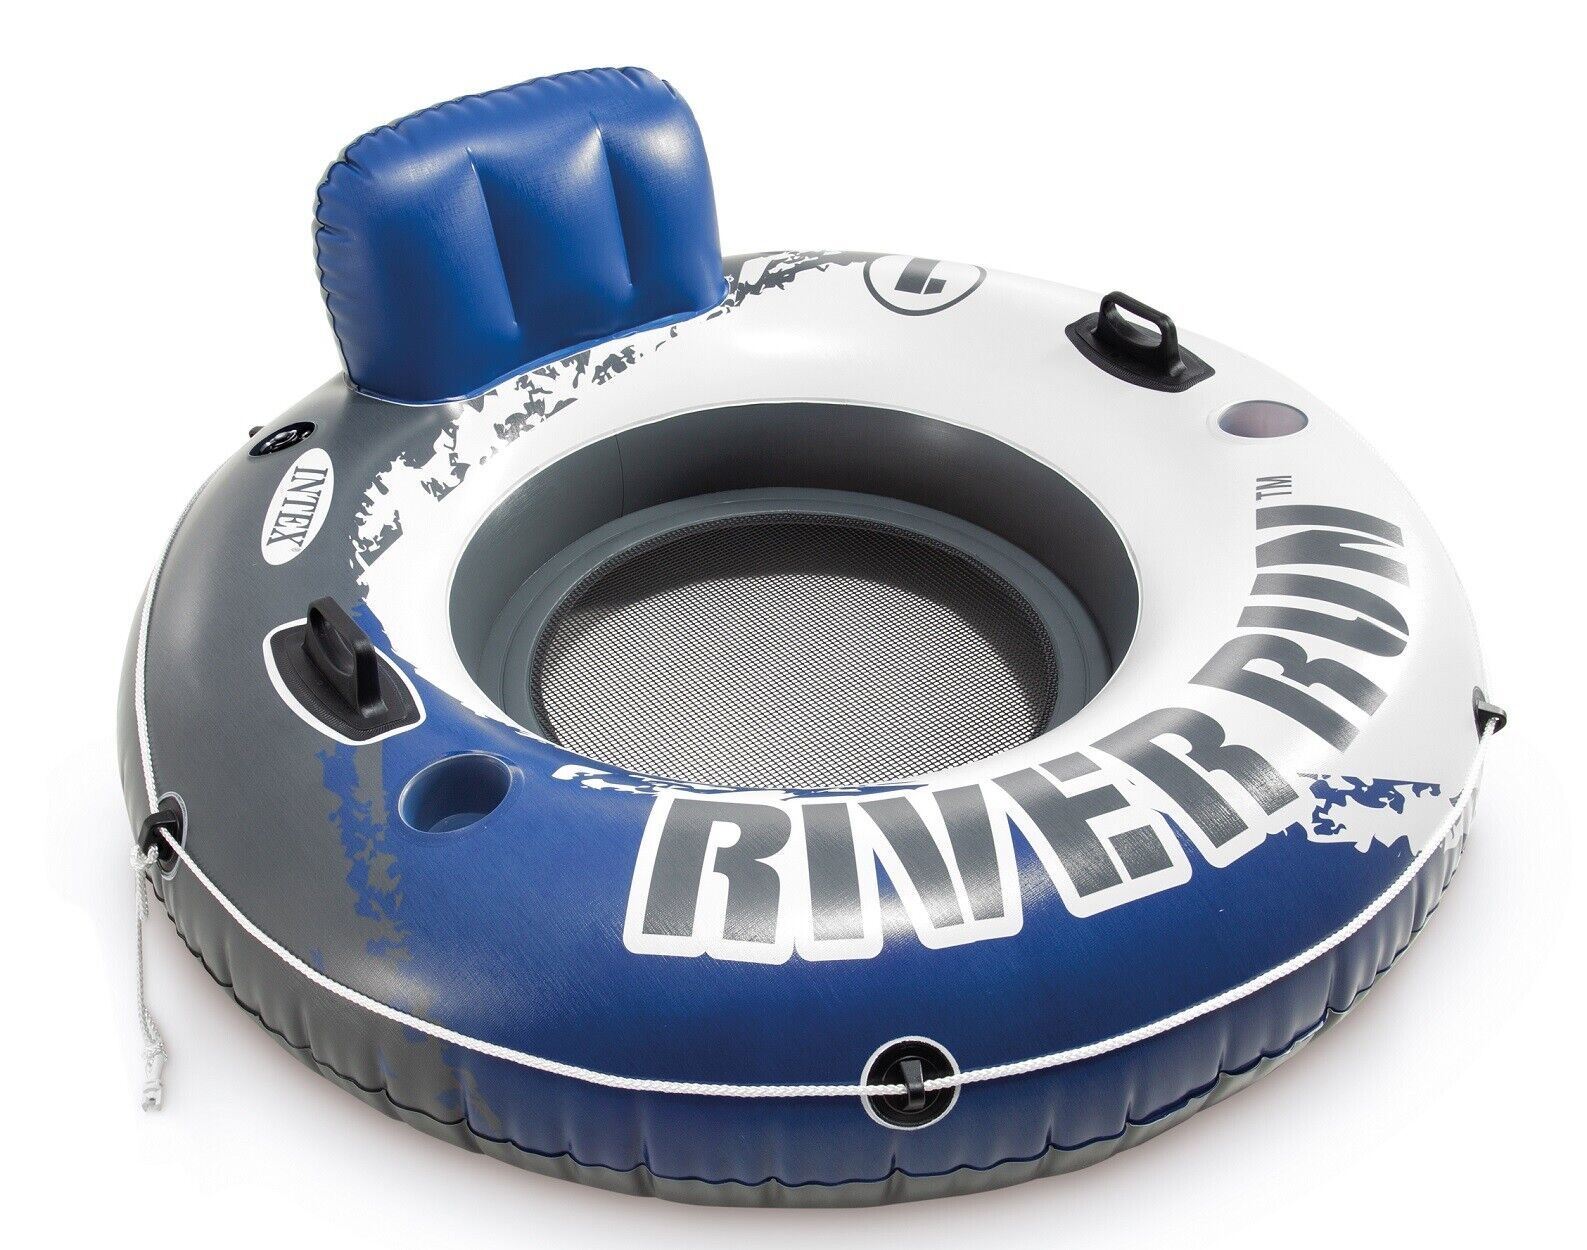 Intex River Run 1 BLUE 53inch Inflatable Floating Lake Tube 2Pack - $80.74